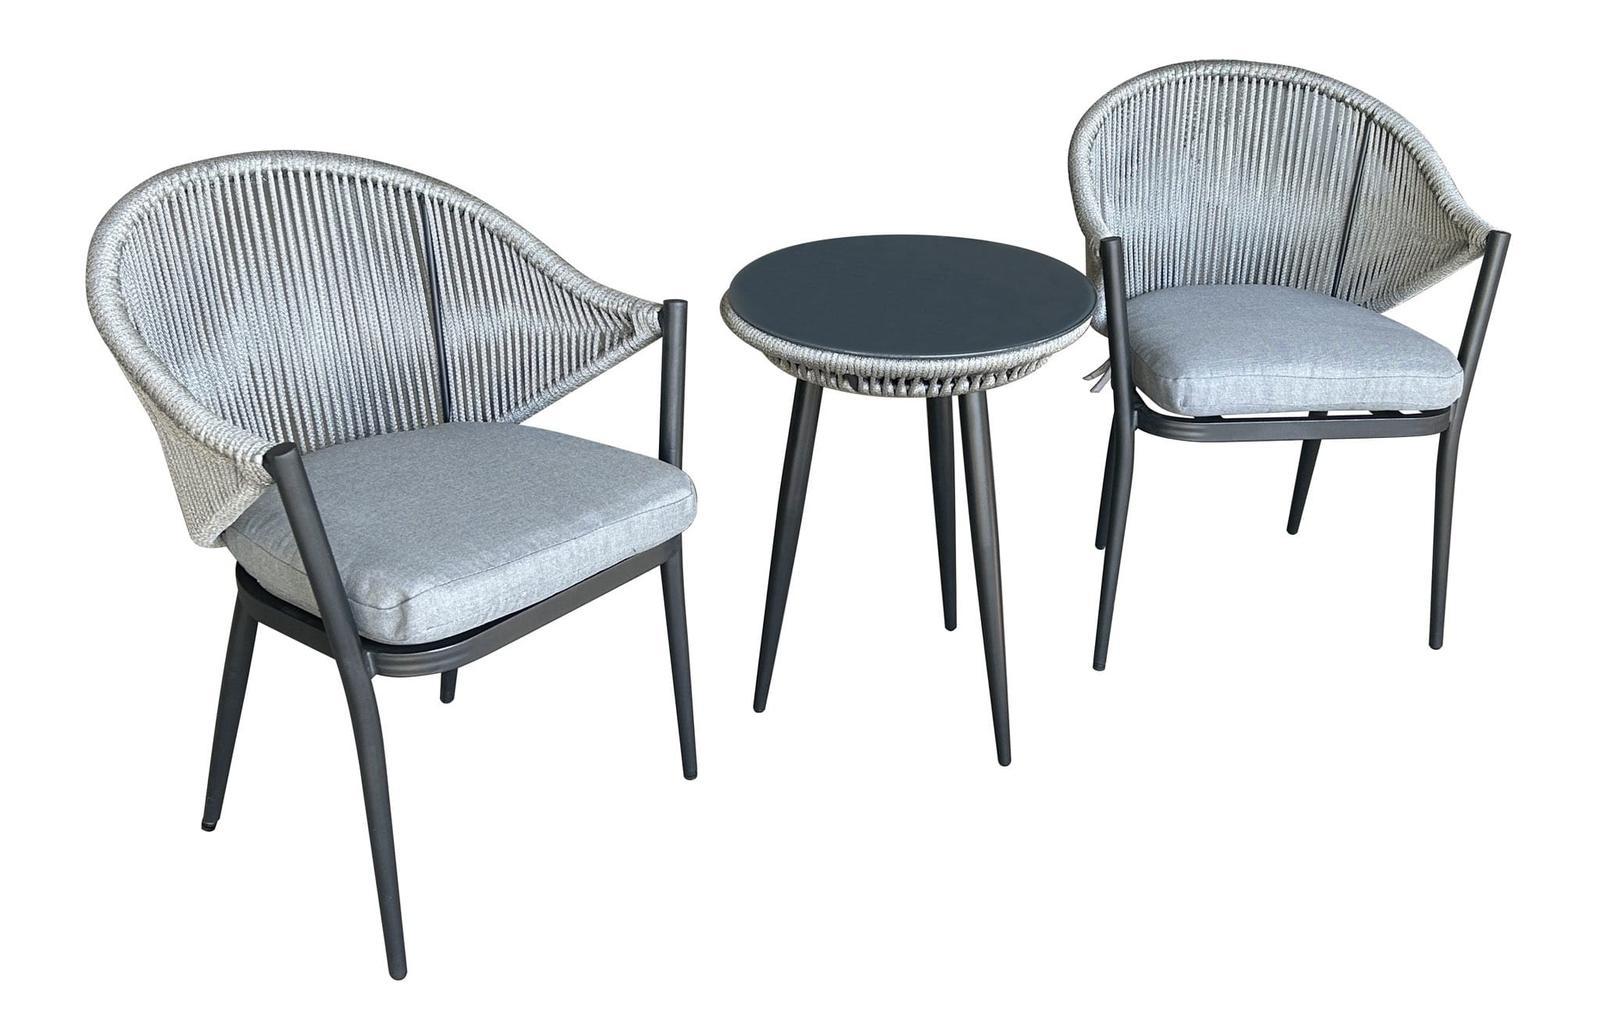 Meble balkonowe z aluminium BREVE 2 fotele i stolik szare do ogrodu nr. 2